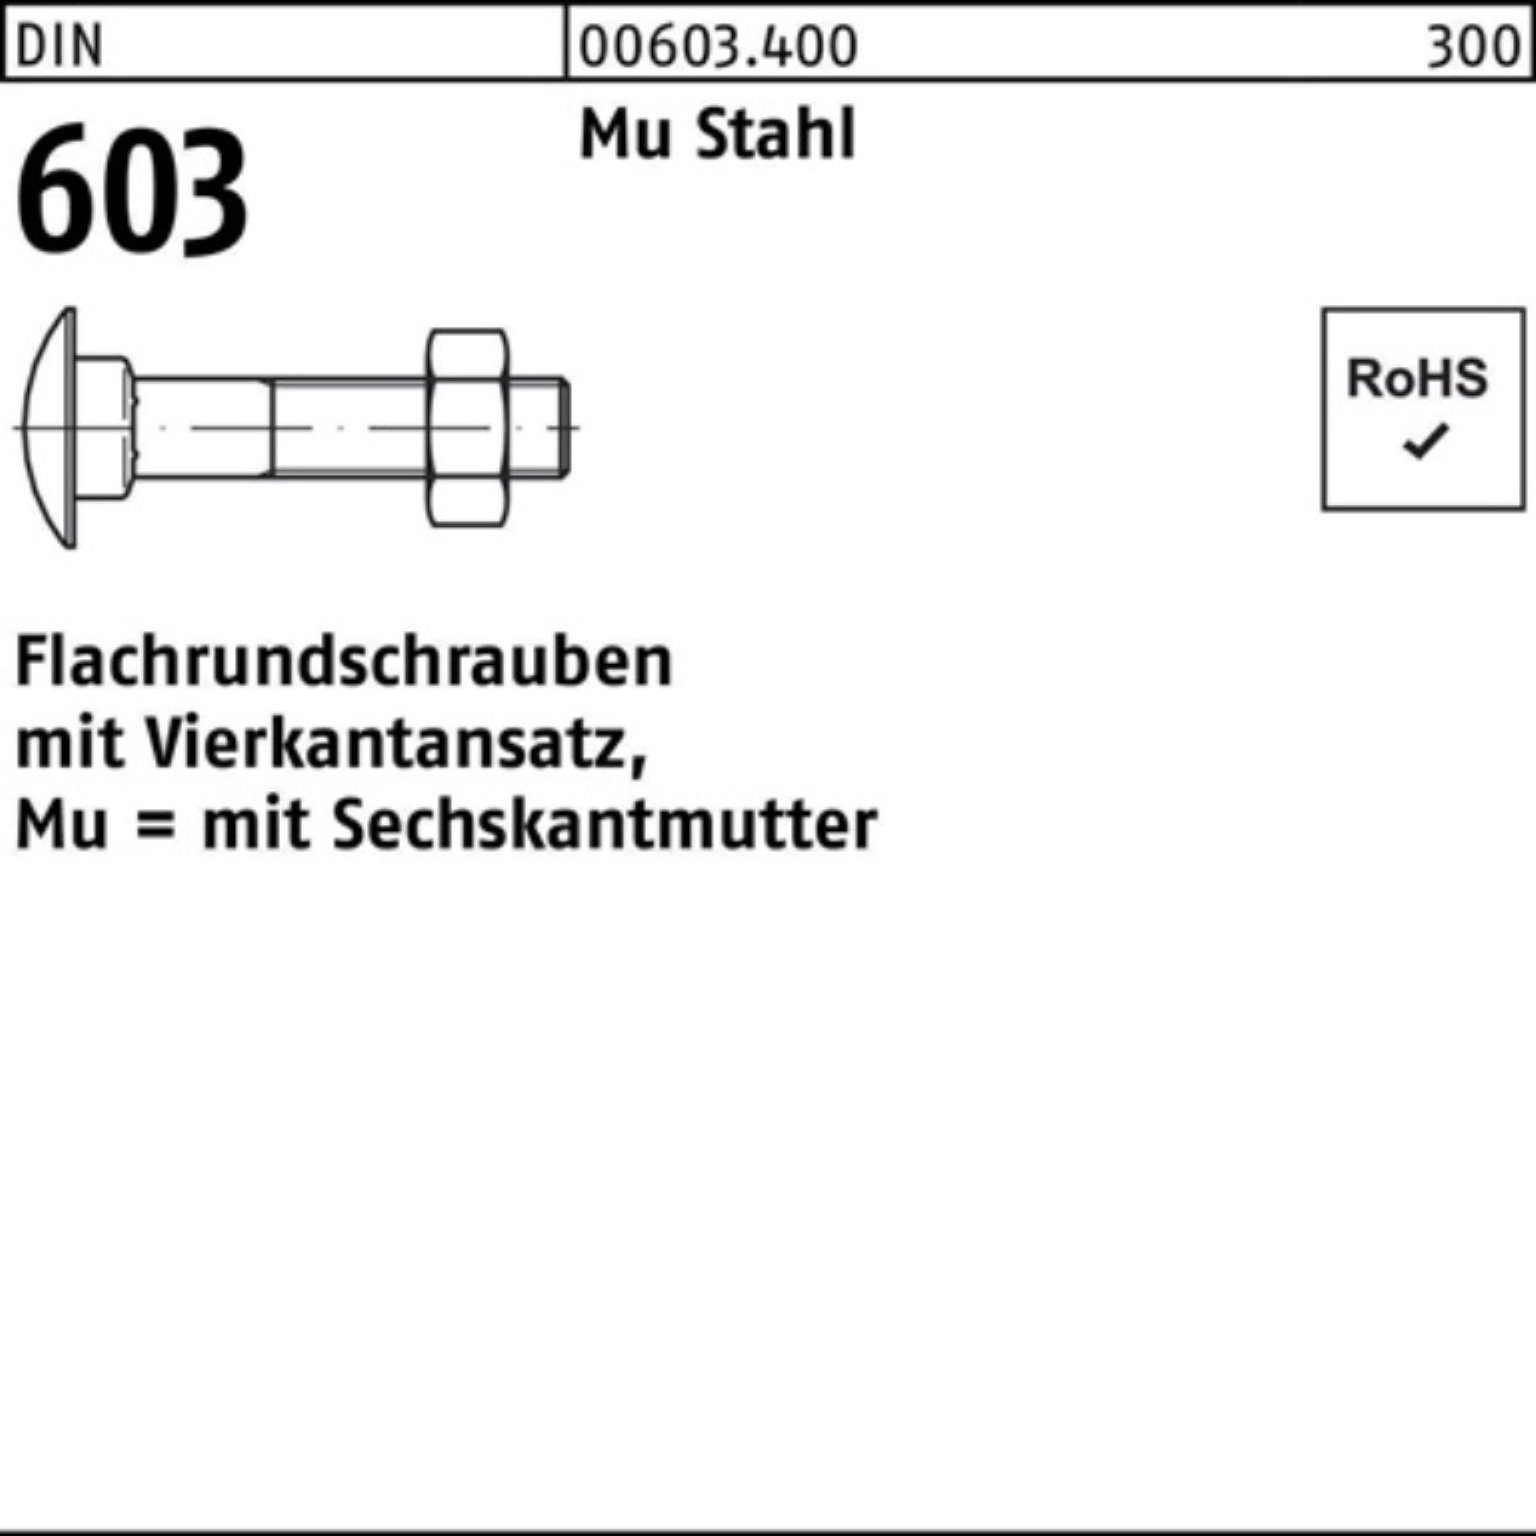 DIN 603 Flachrundschraube M20x280 Vierkantansatz/6-ktmutter Reyher Pack 100er Schraube